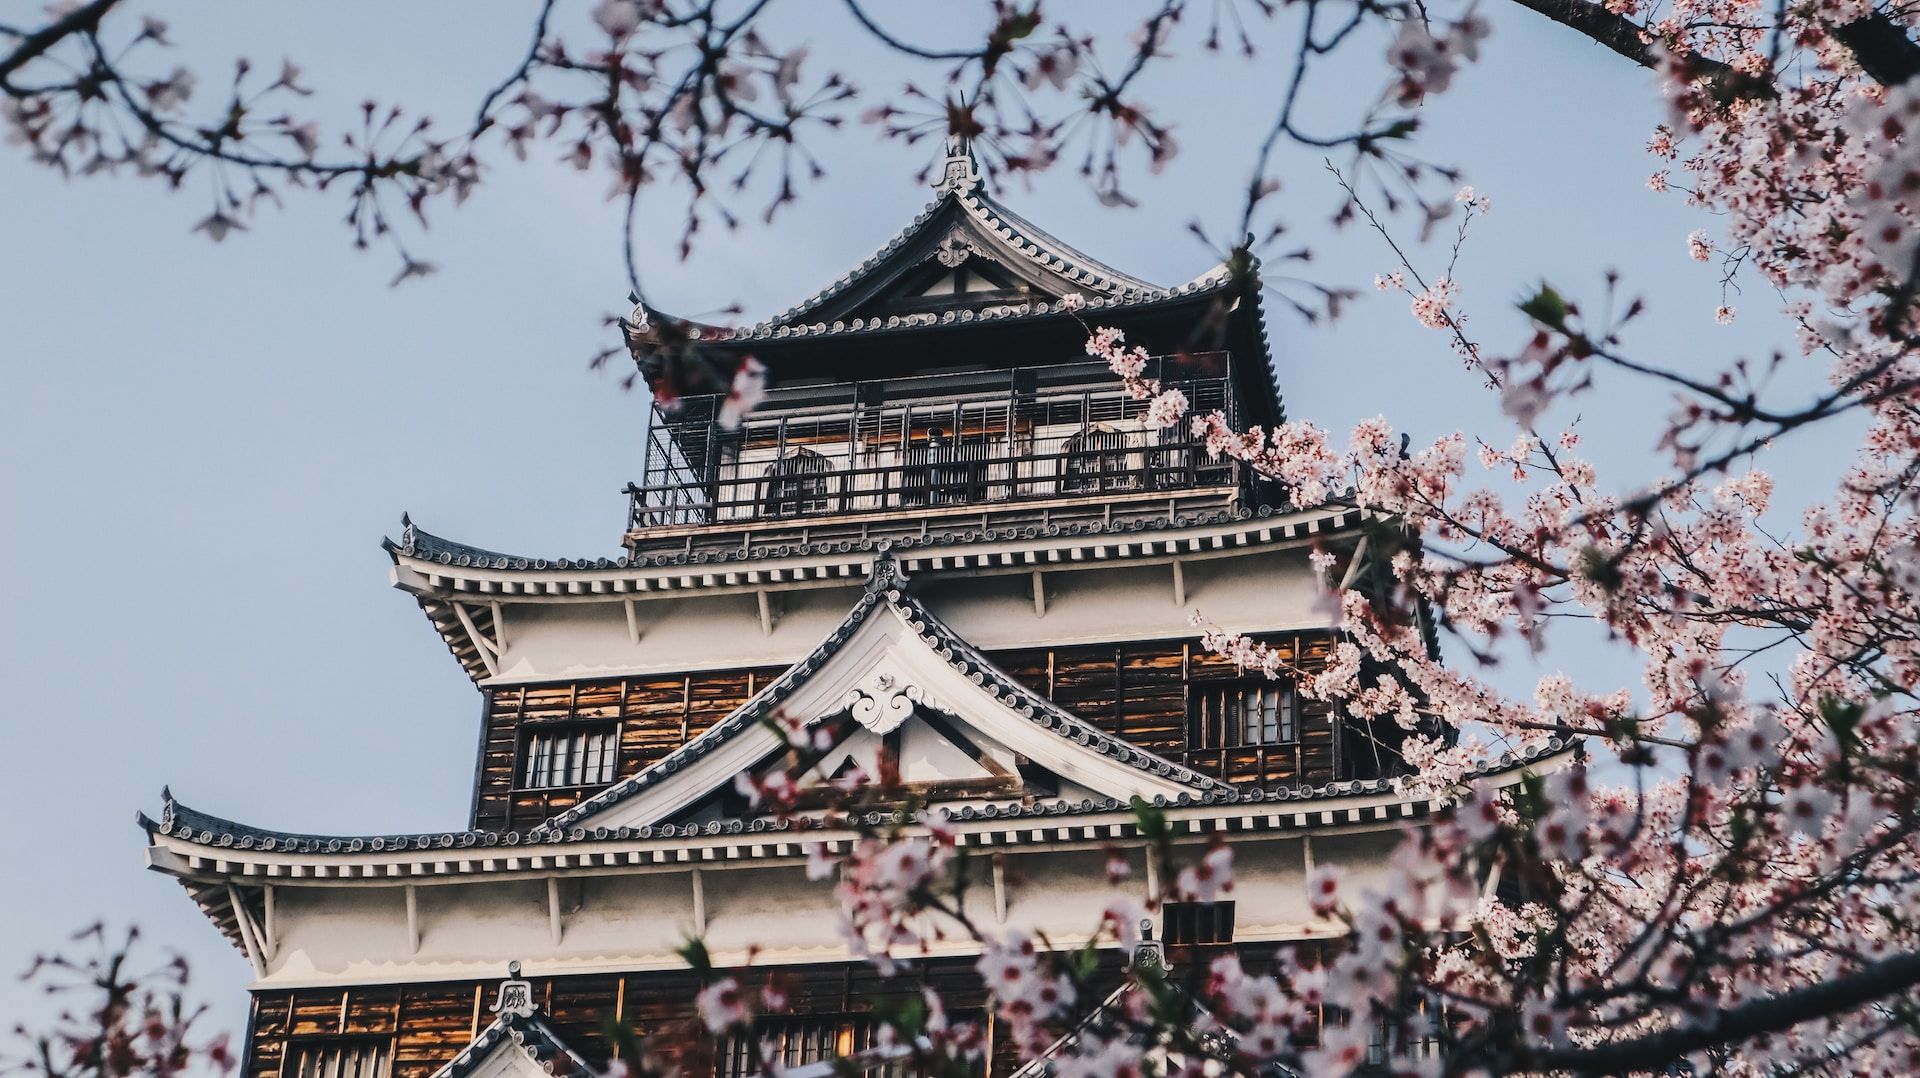 Sakura cherry blossom trees around Hiroshima Castle, Japan